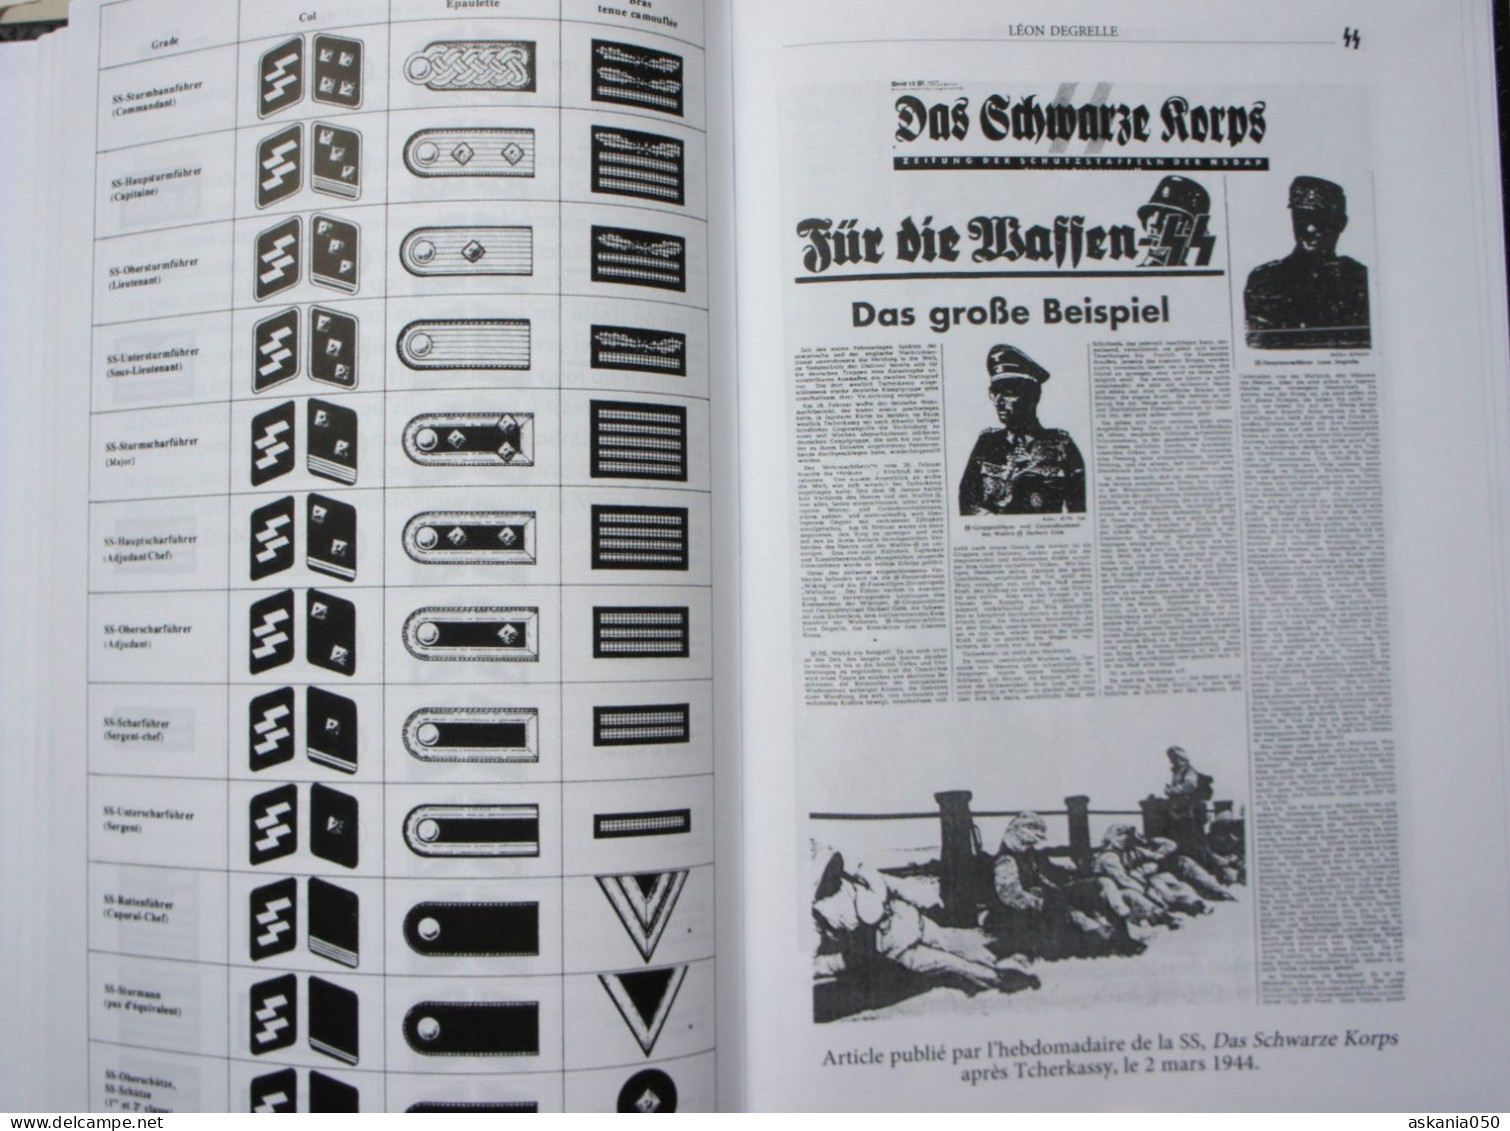 DEGRELLE Histoire de la Waffens SS Légion Wallonie Waffen SS REX Rexisme